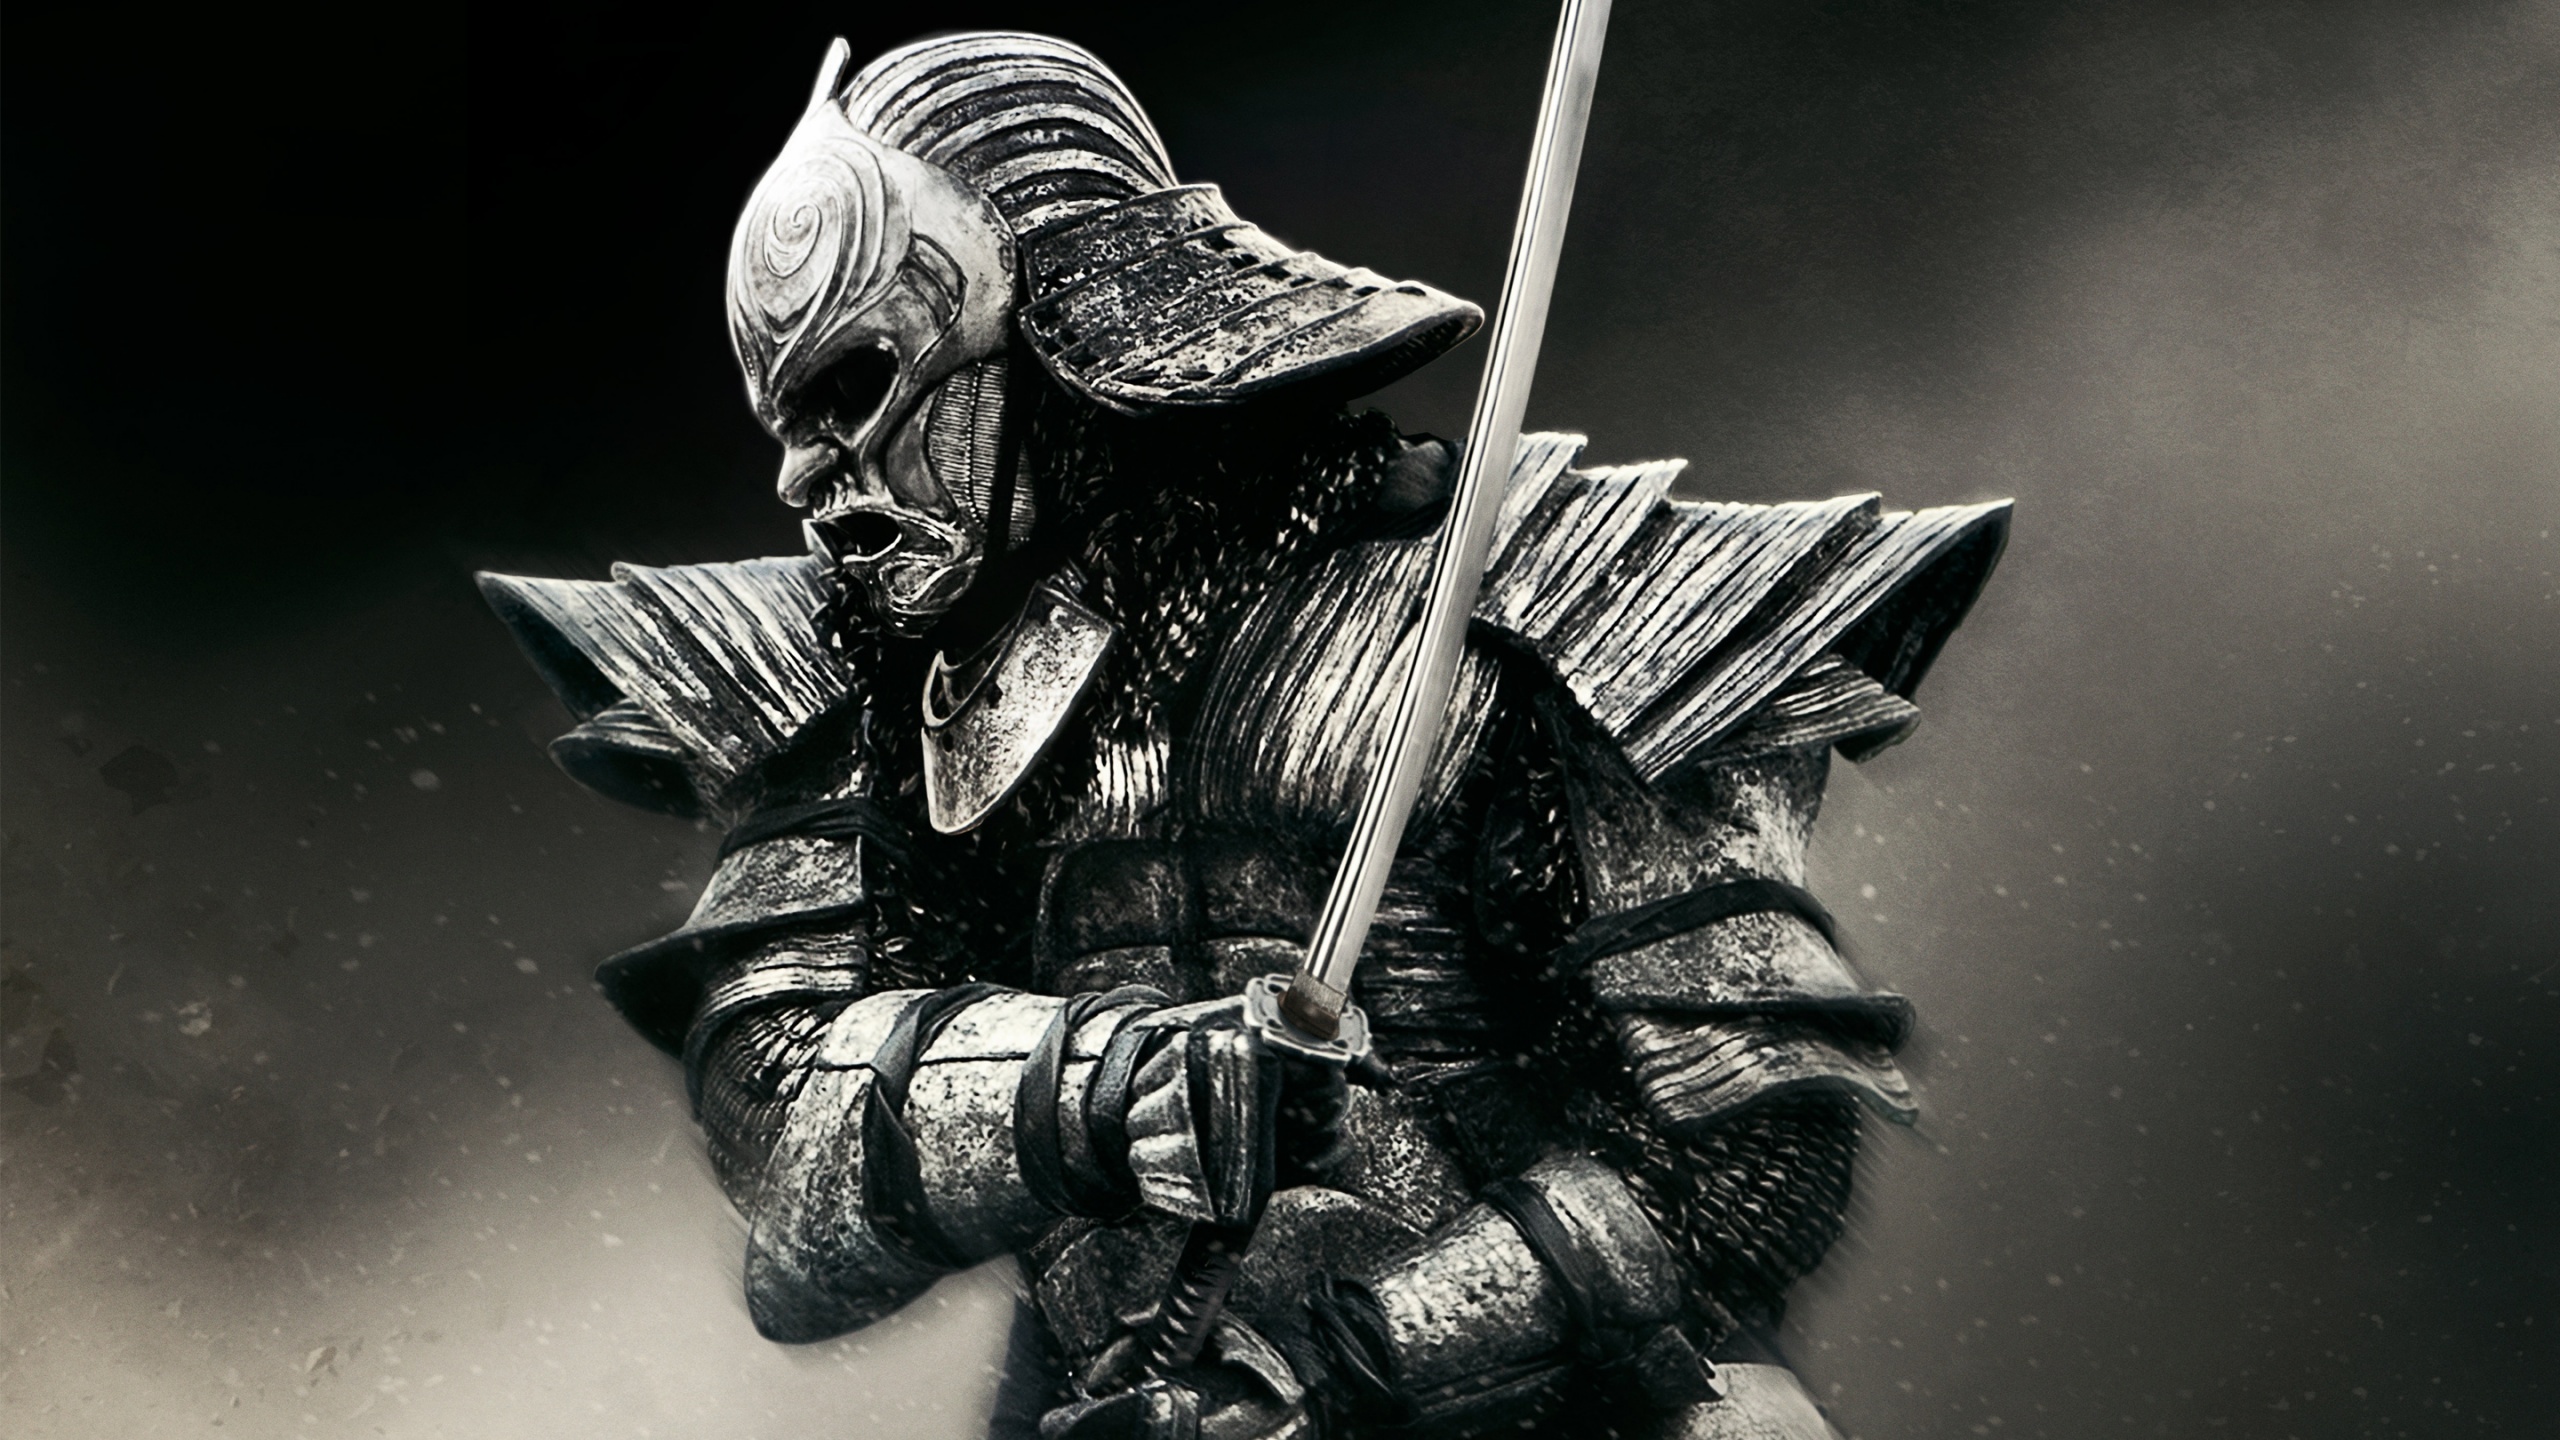 General 2560x1440 digital art samurai warrior sword katana armor